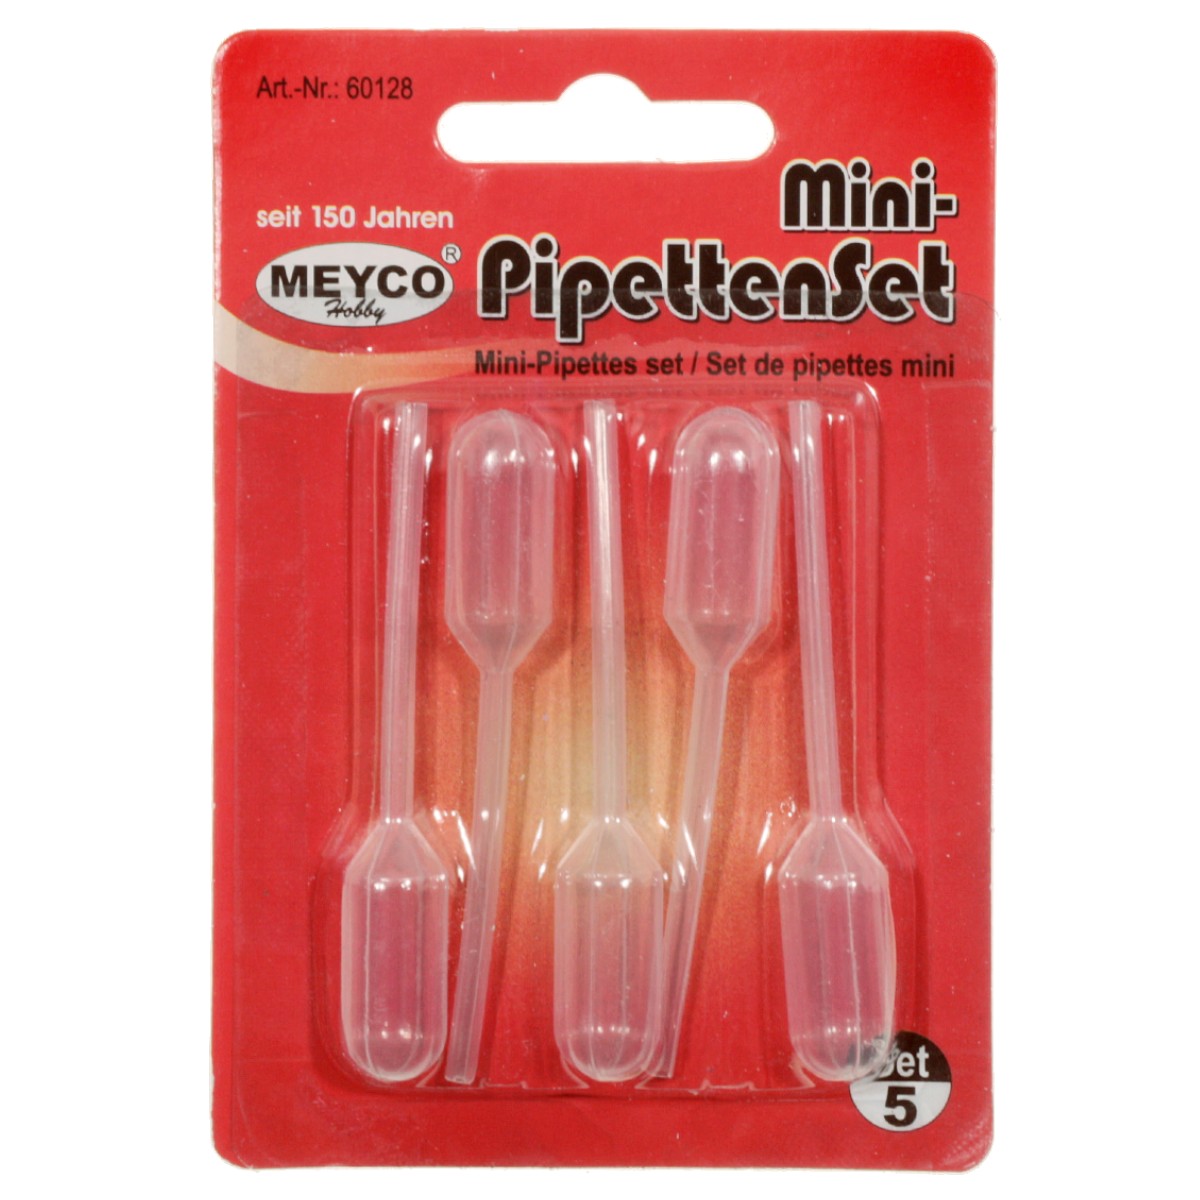 Pipeta plastic 6 5x1cm 5 set Meyco 60128